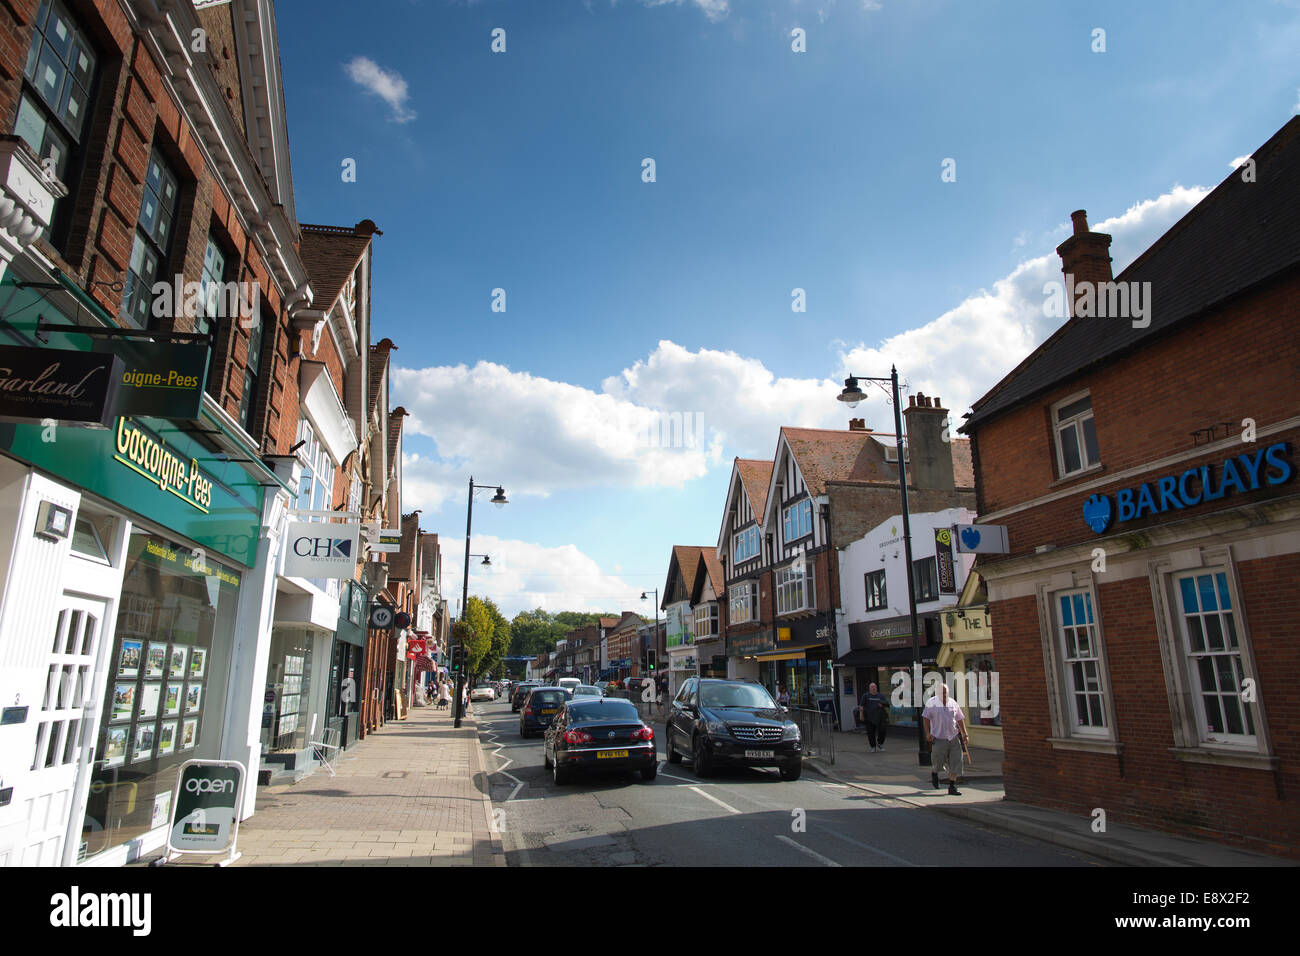 Cobham village, High Street, Surrey, England, UK Stock Photo